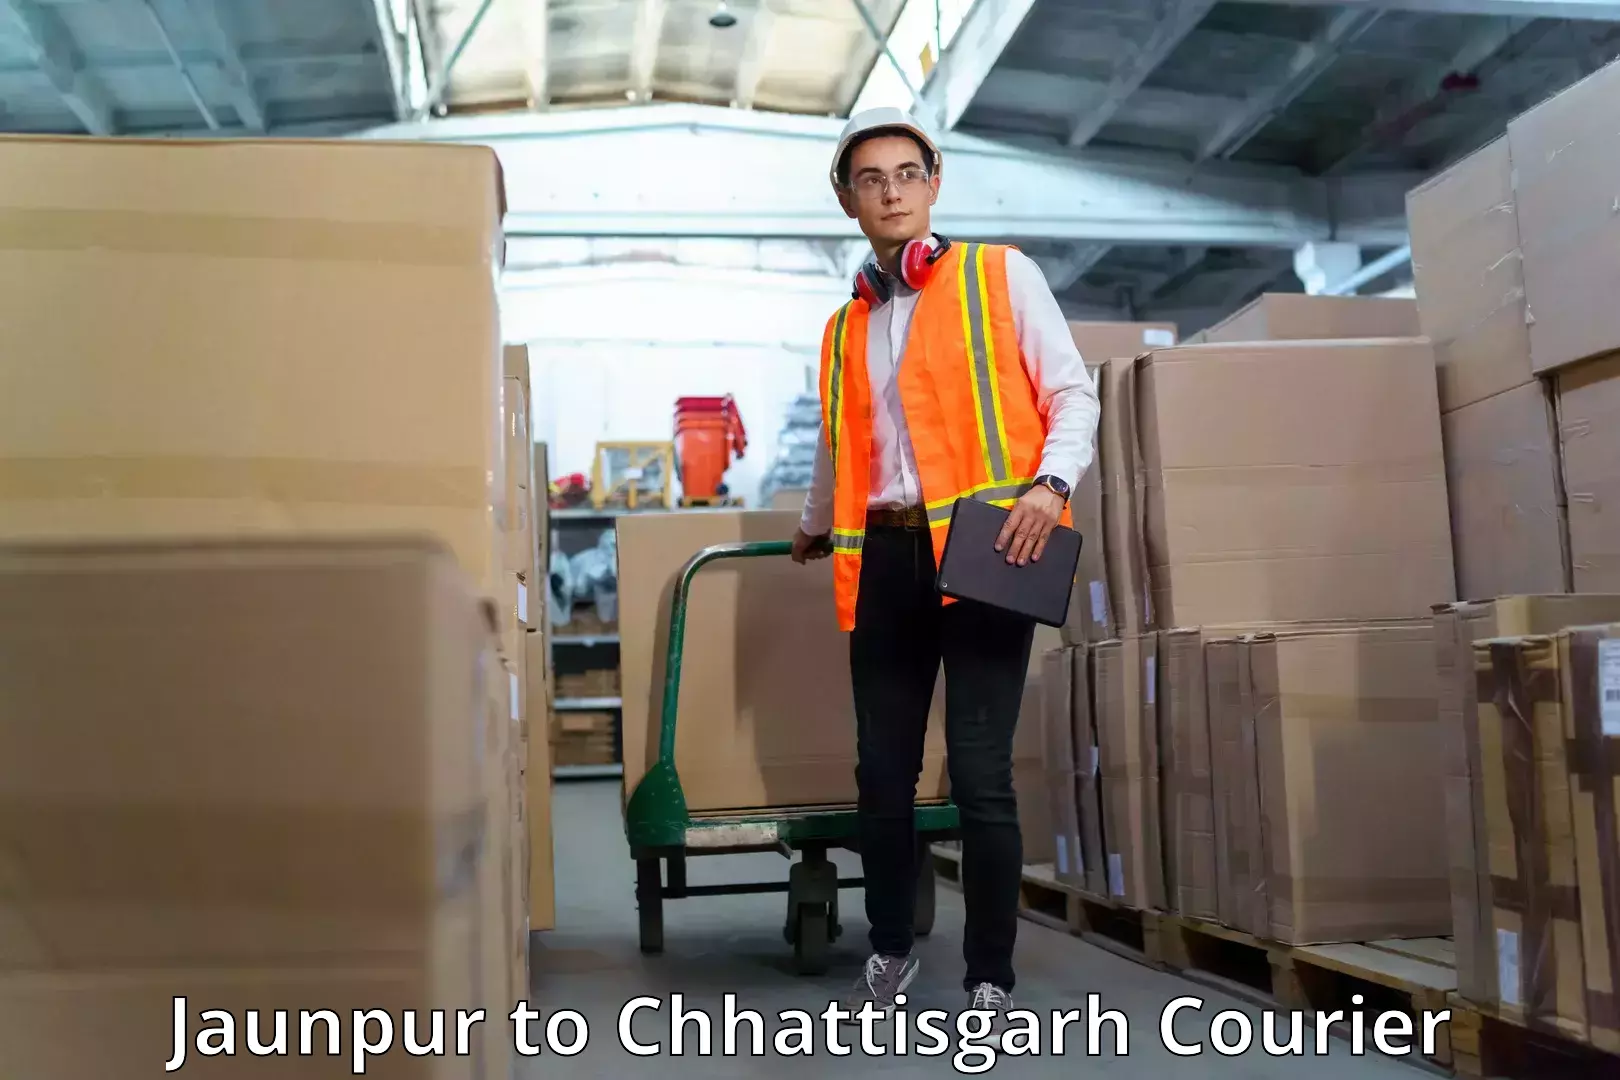 Courier service partnerships in Jaunpur to Chhattisgarh